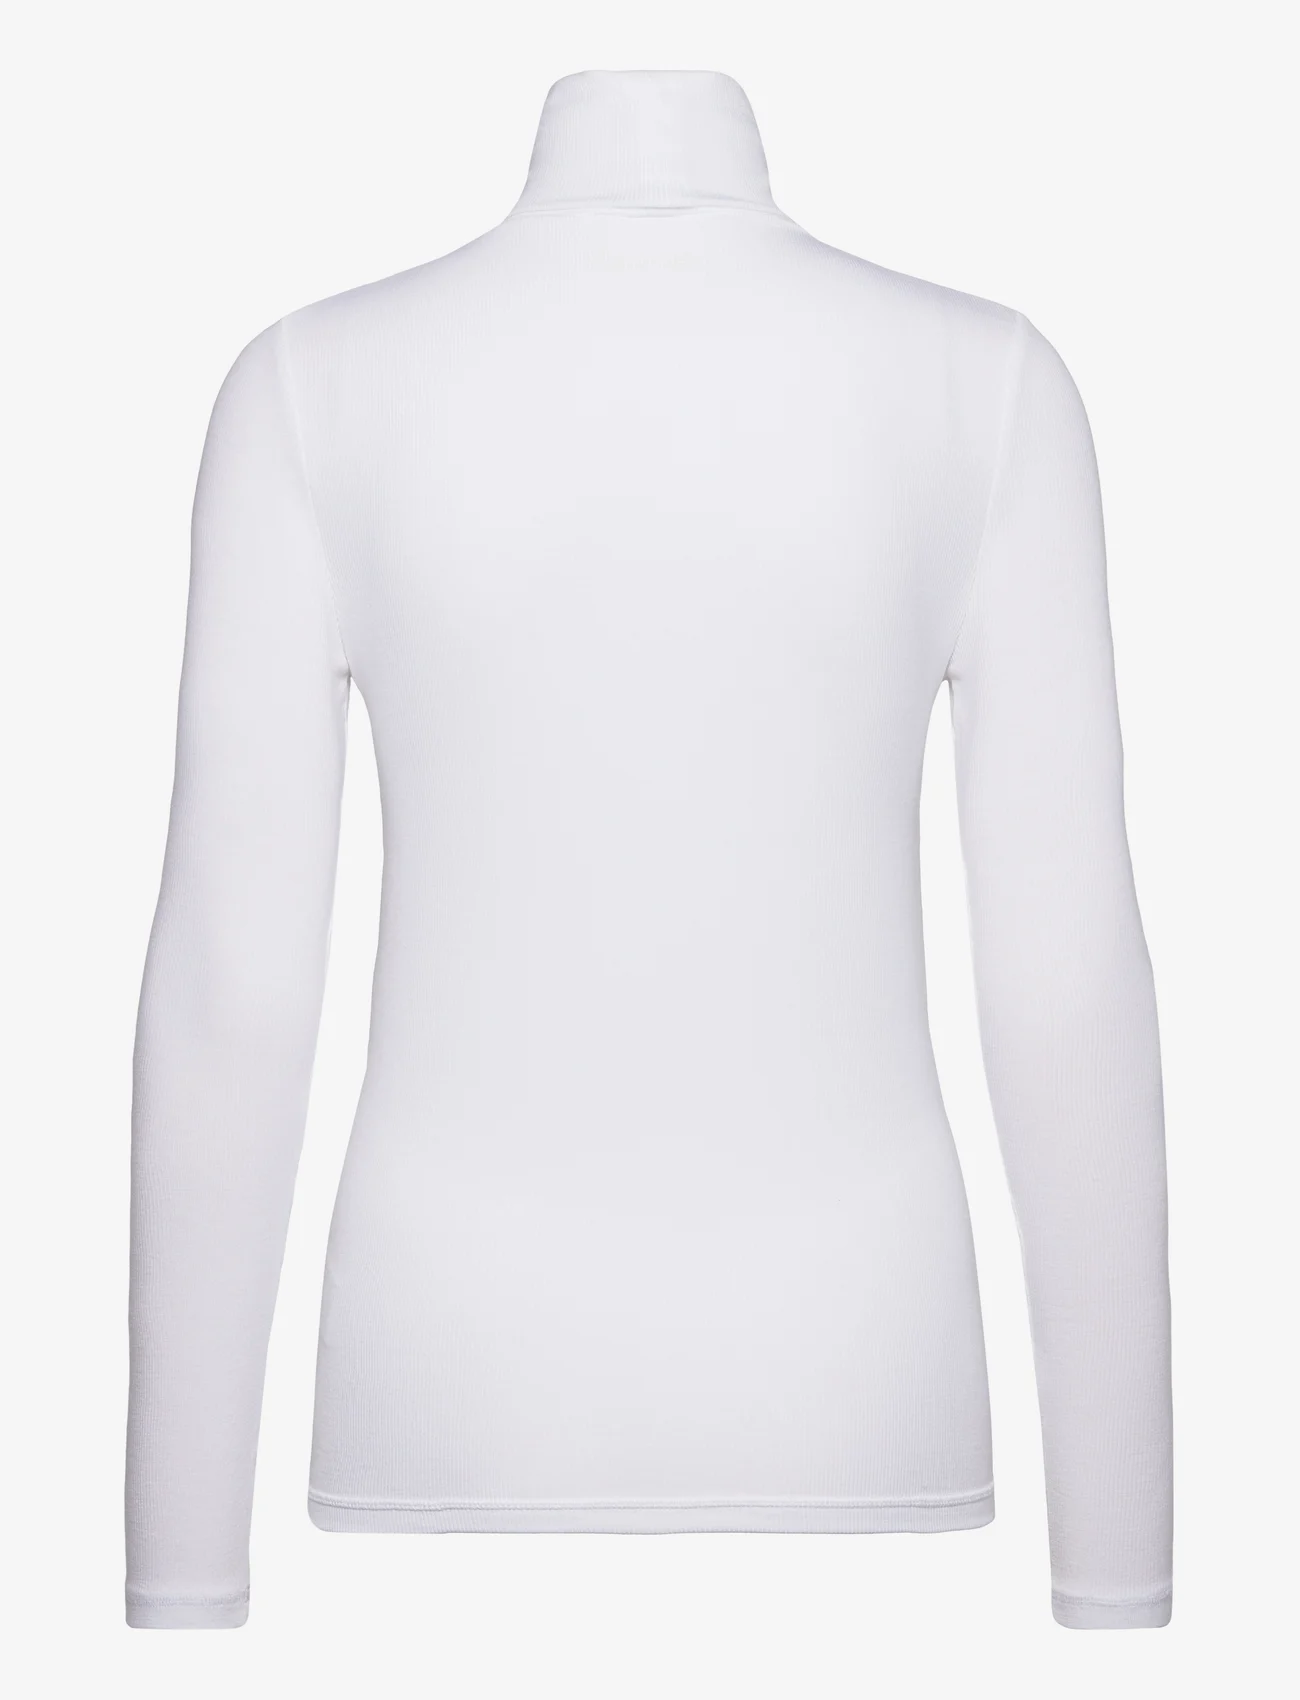 Calvin Klein - MODAL RIB LONGSLEEVE TURTLENECK - turtleneck - bright white - 1